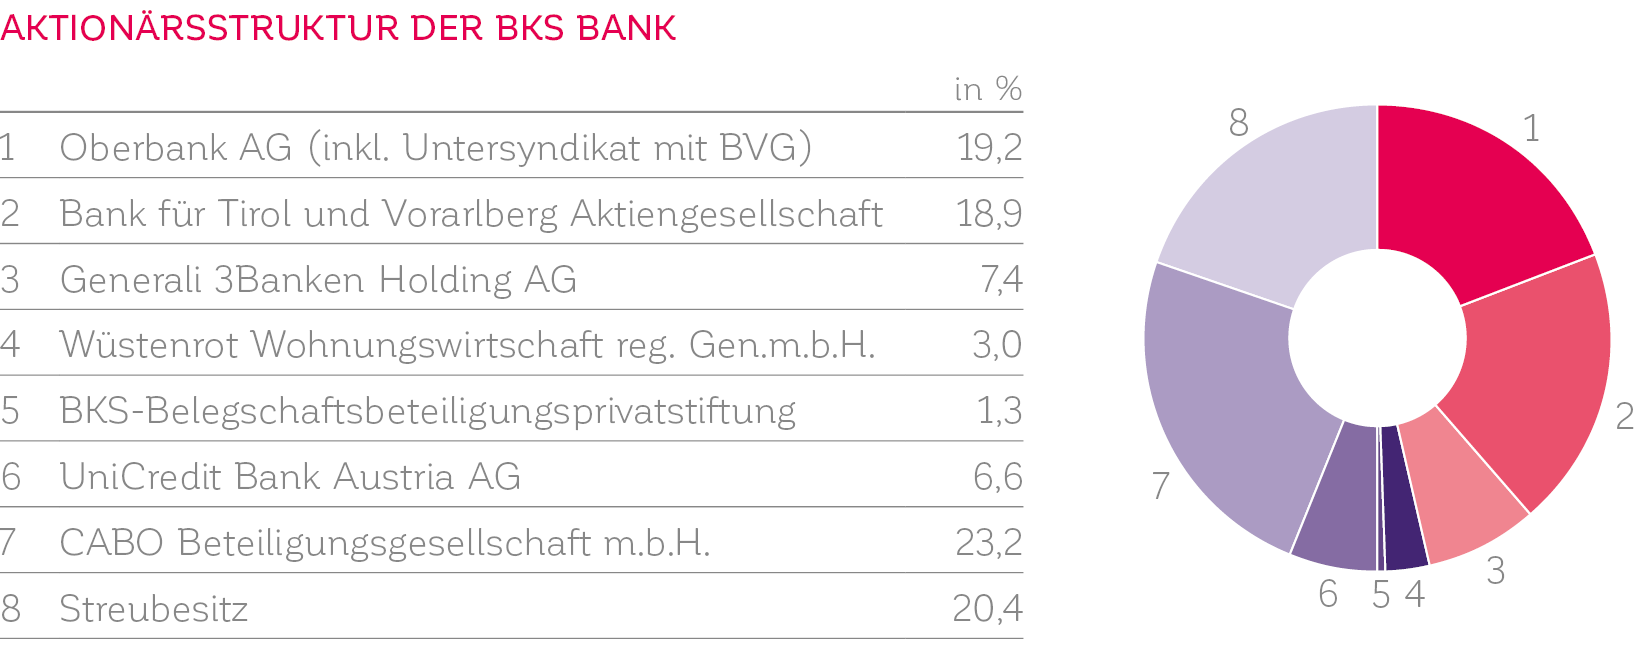 Aktionärssturktur der BKS Bank